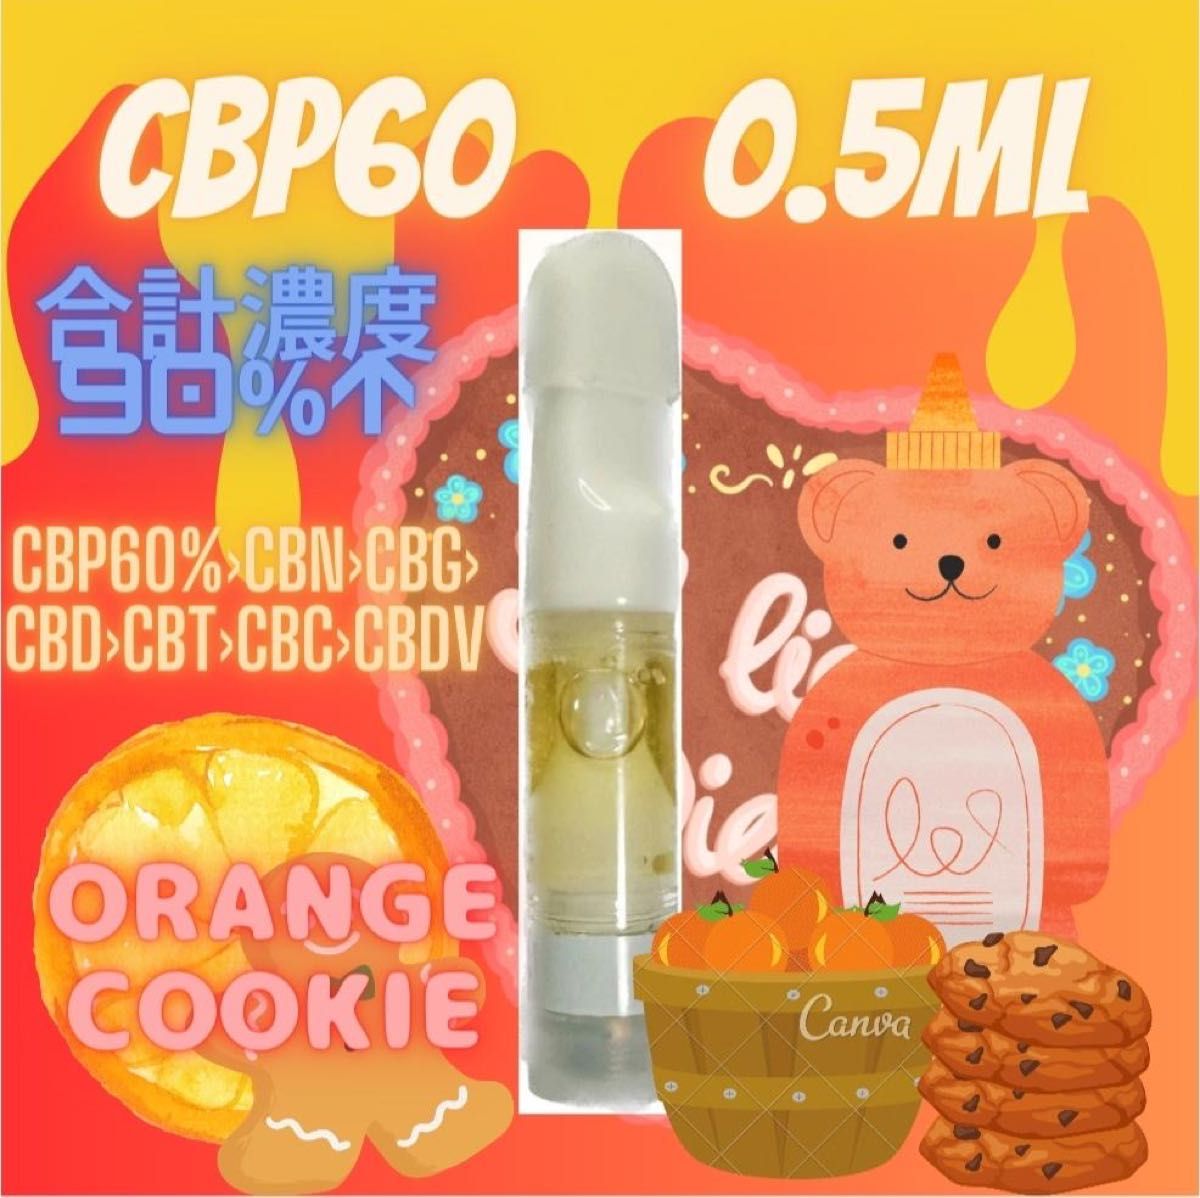 CBP 60% orange cookie 0.5ml